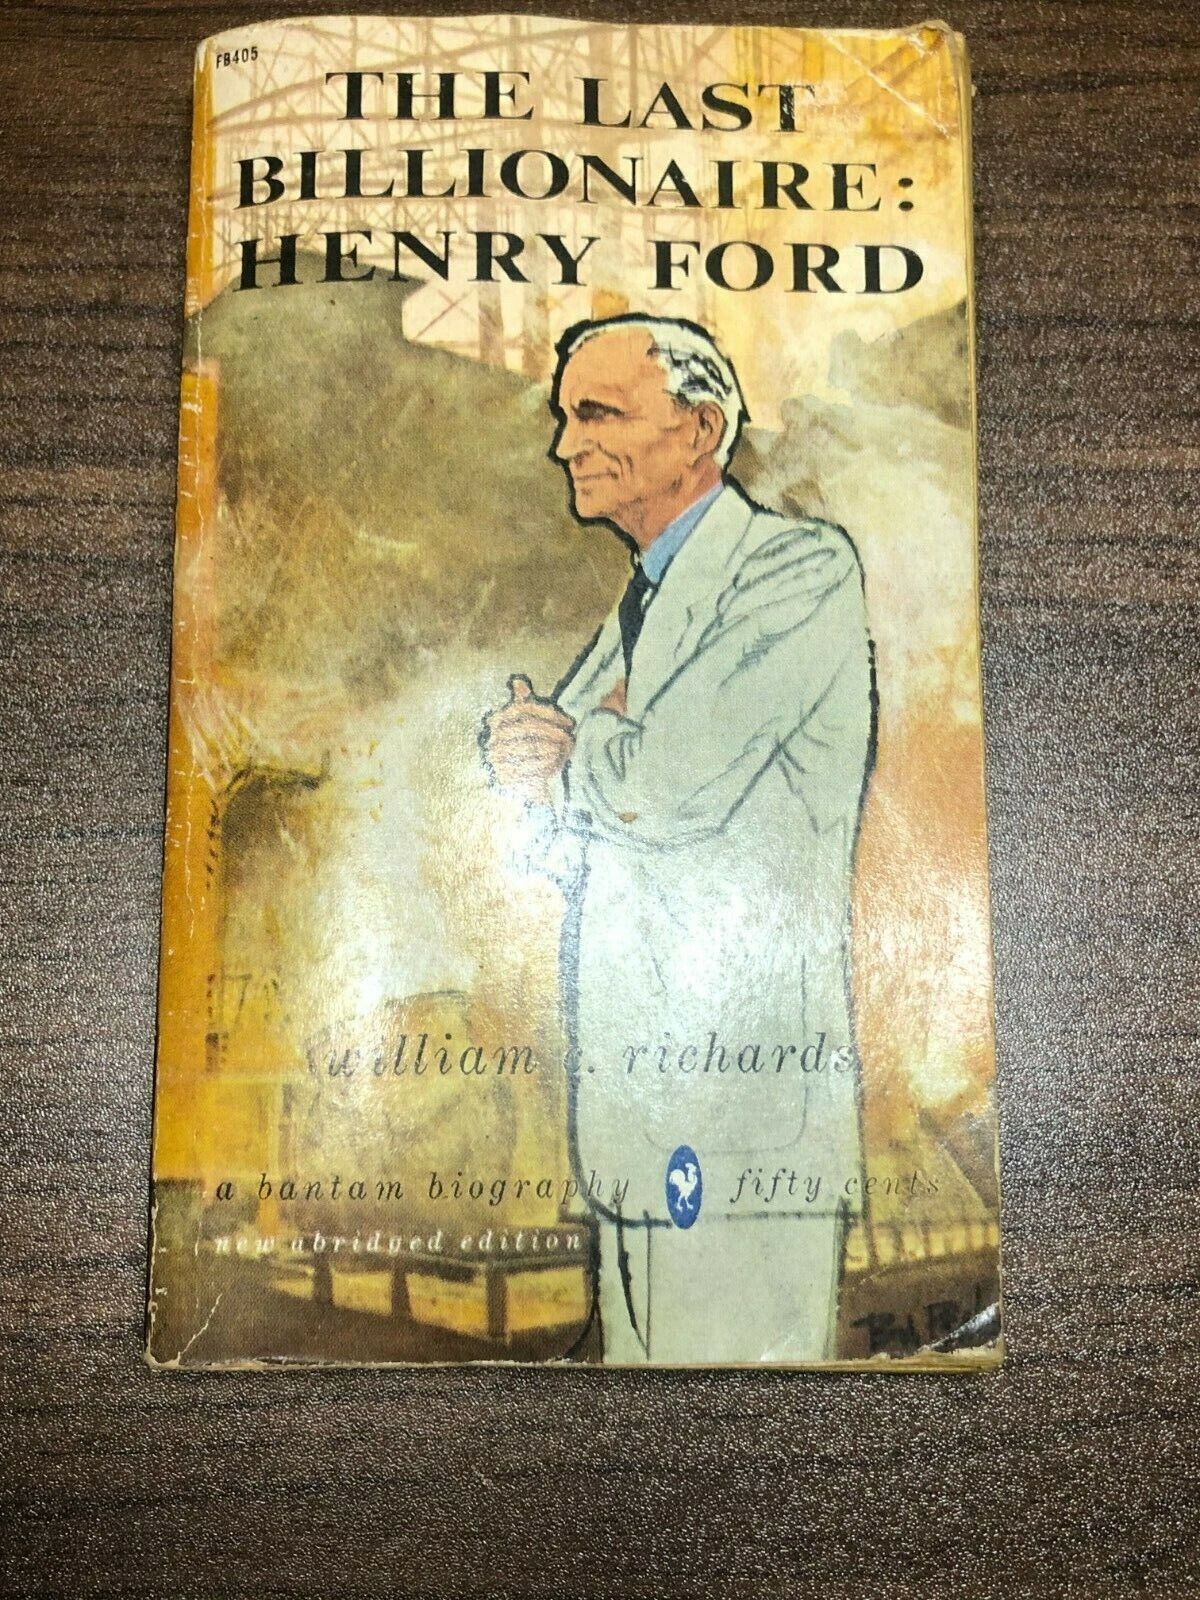 The Last Billionaire:  Henry Ford - Lot P-3